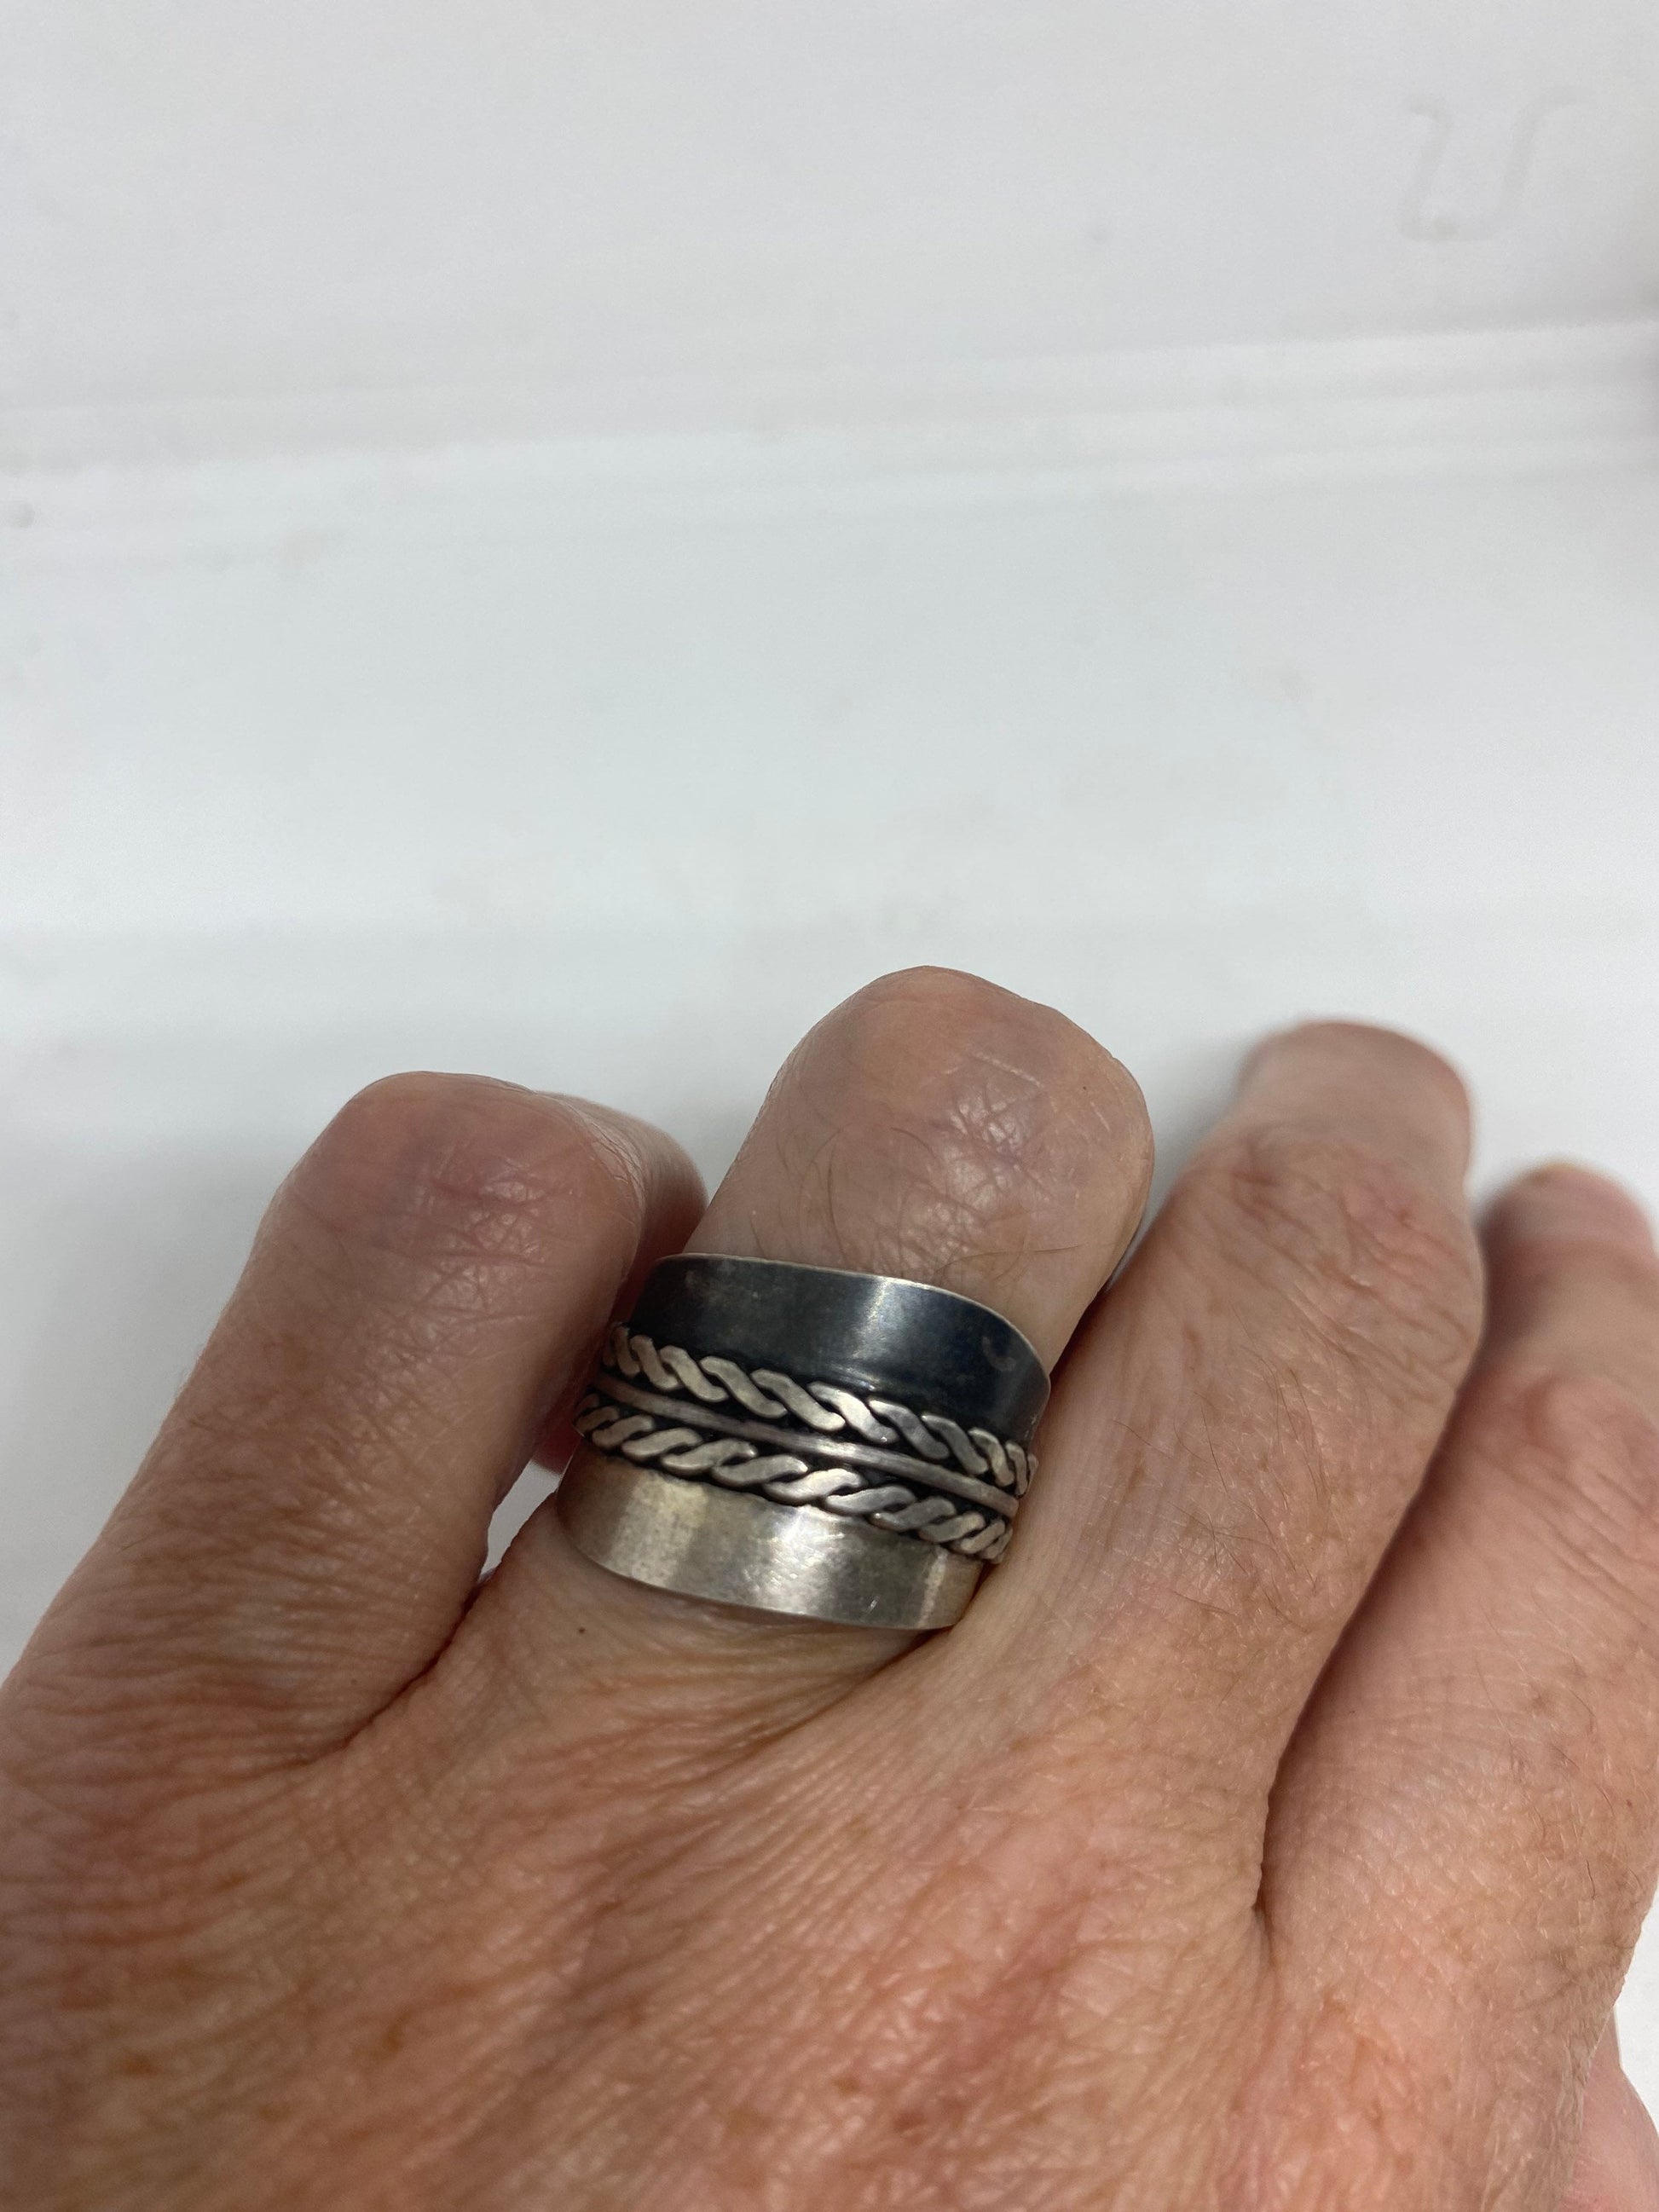 Vintage Wedding Band Ring 925 Sterling Silver